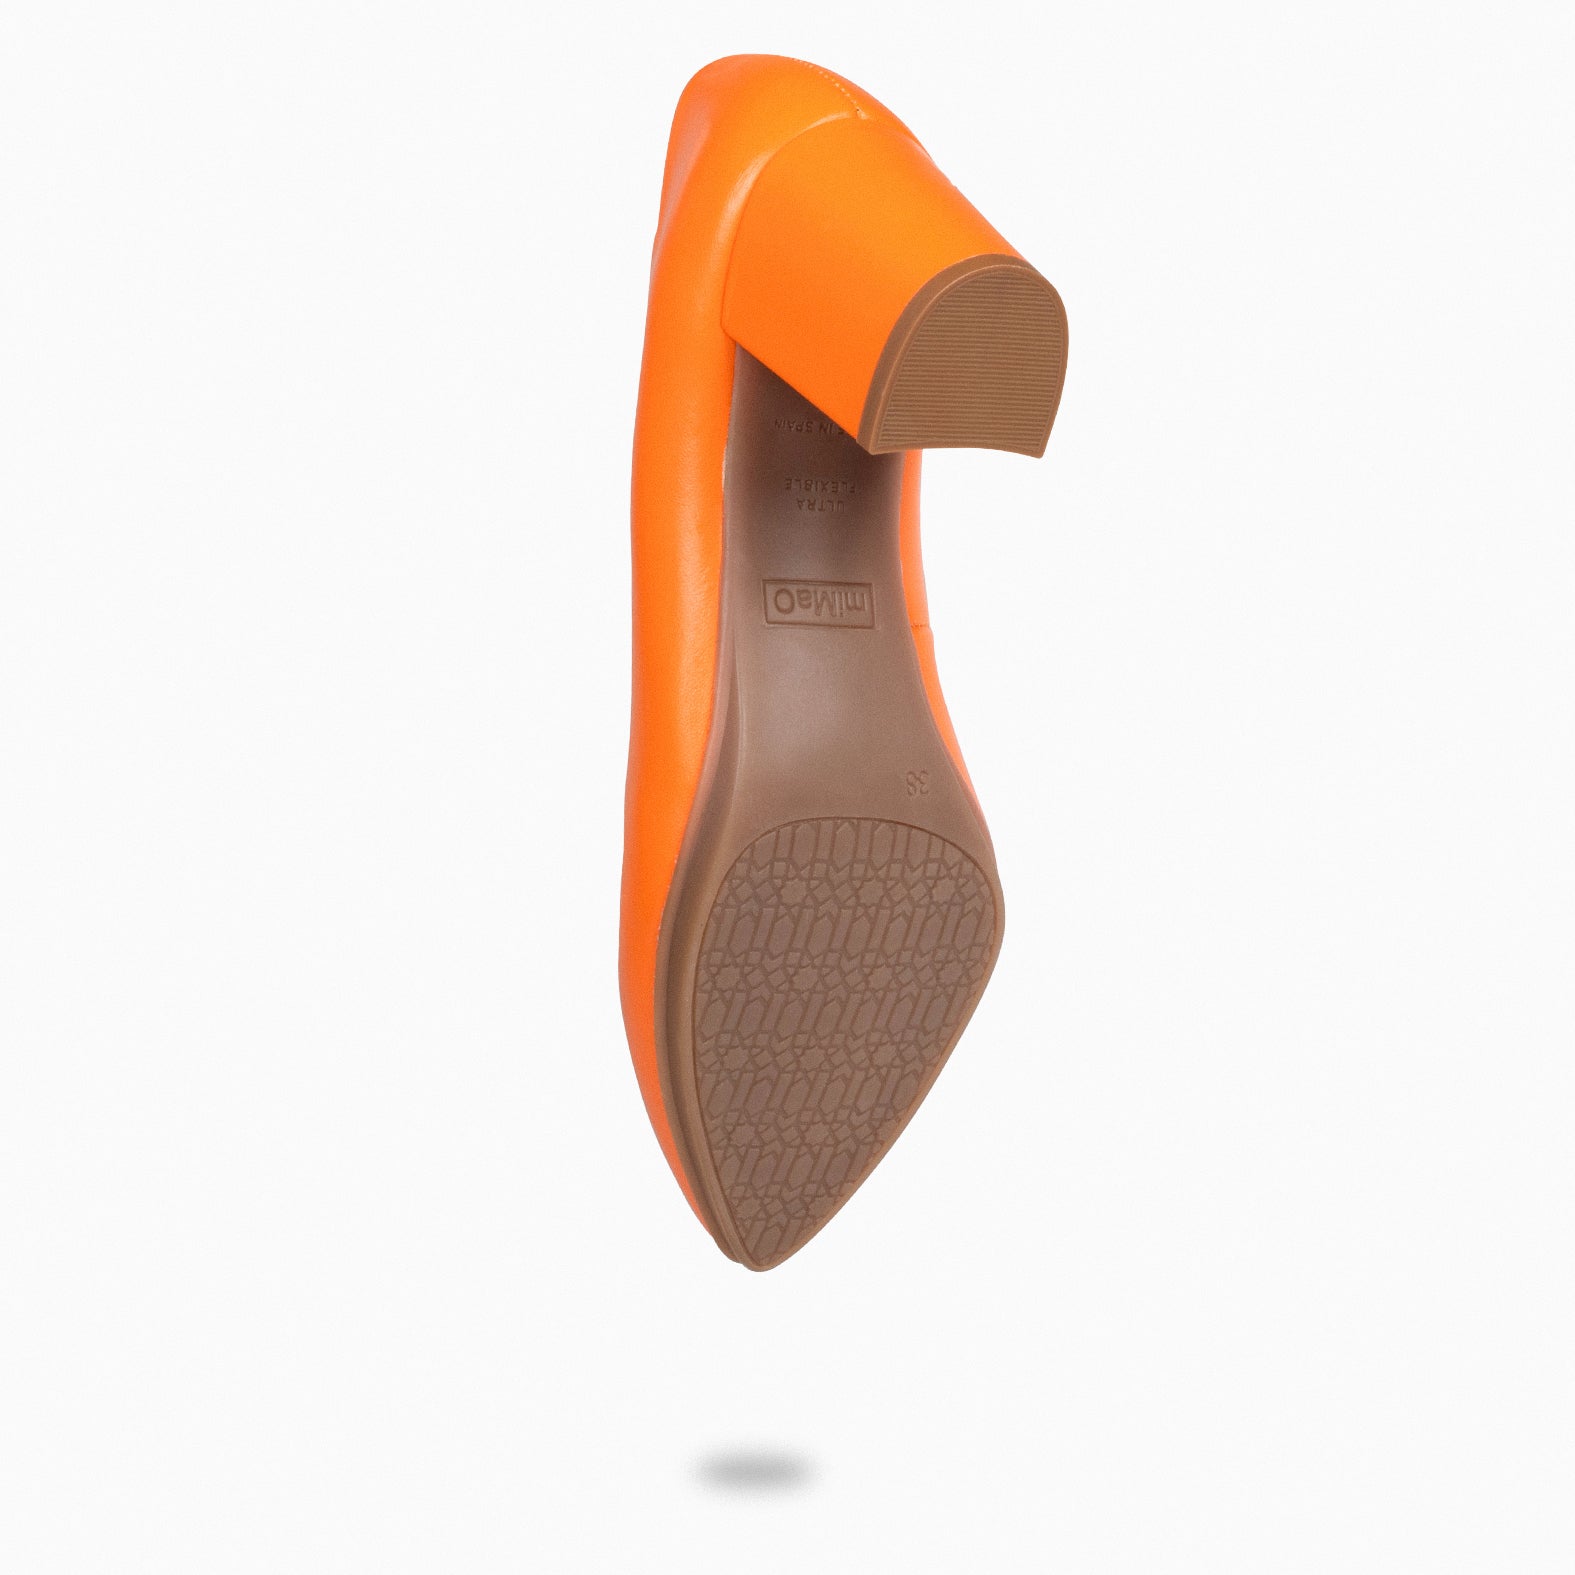 URBAN S SALON – ORANGE nappa leather mid heel